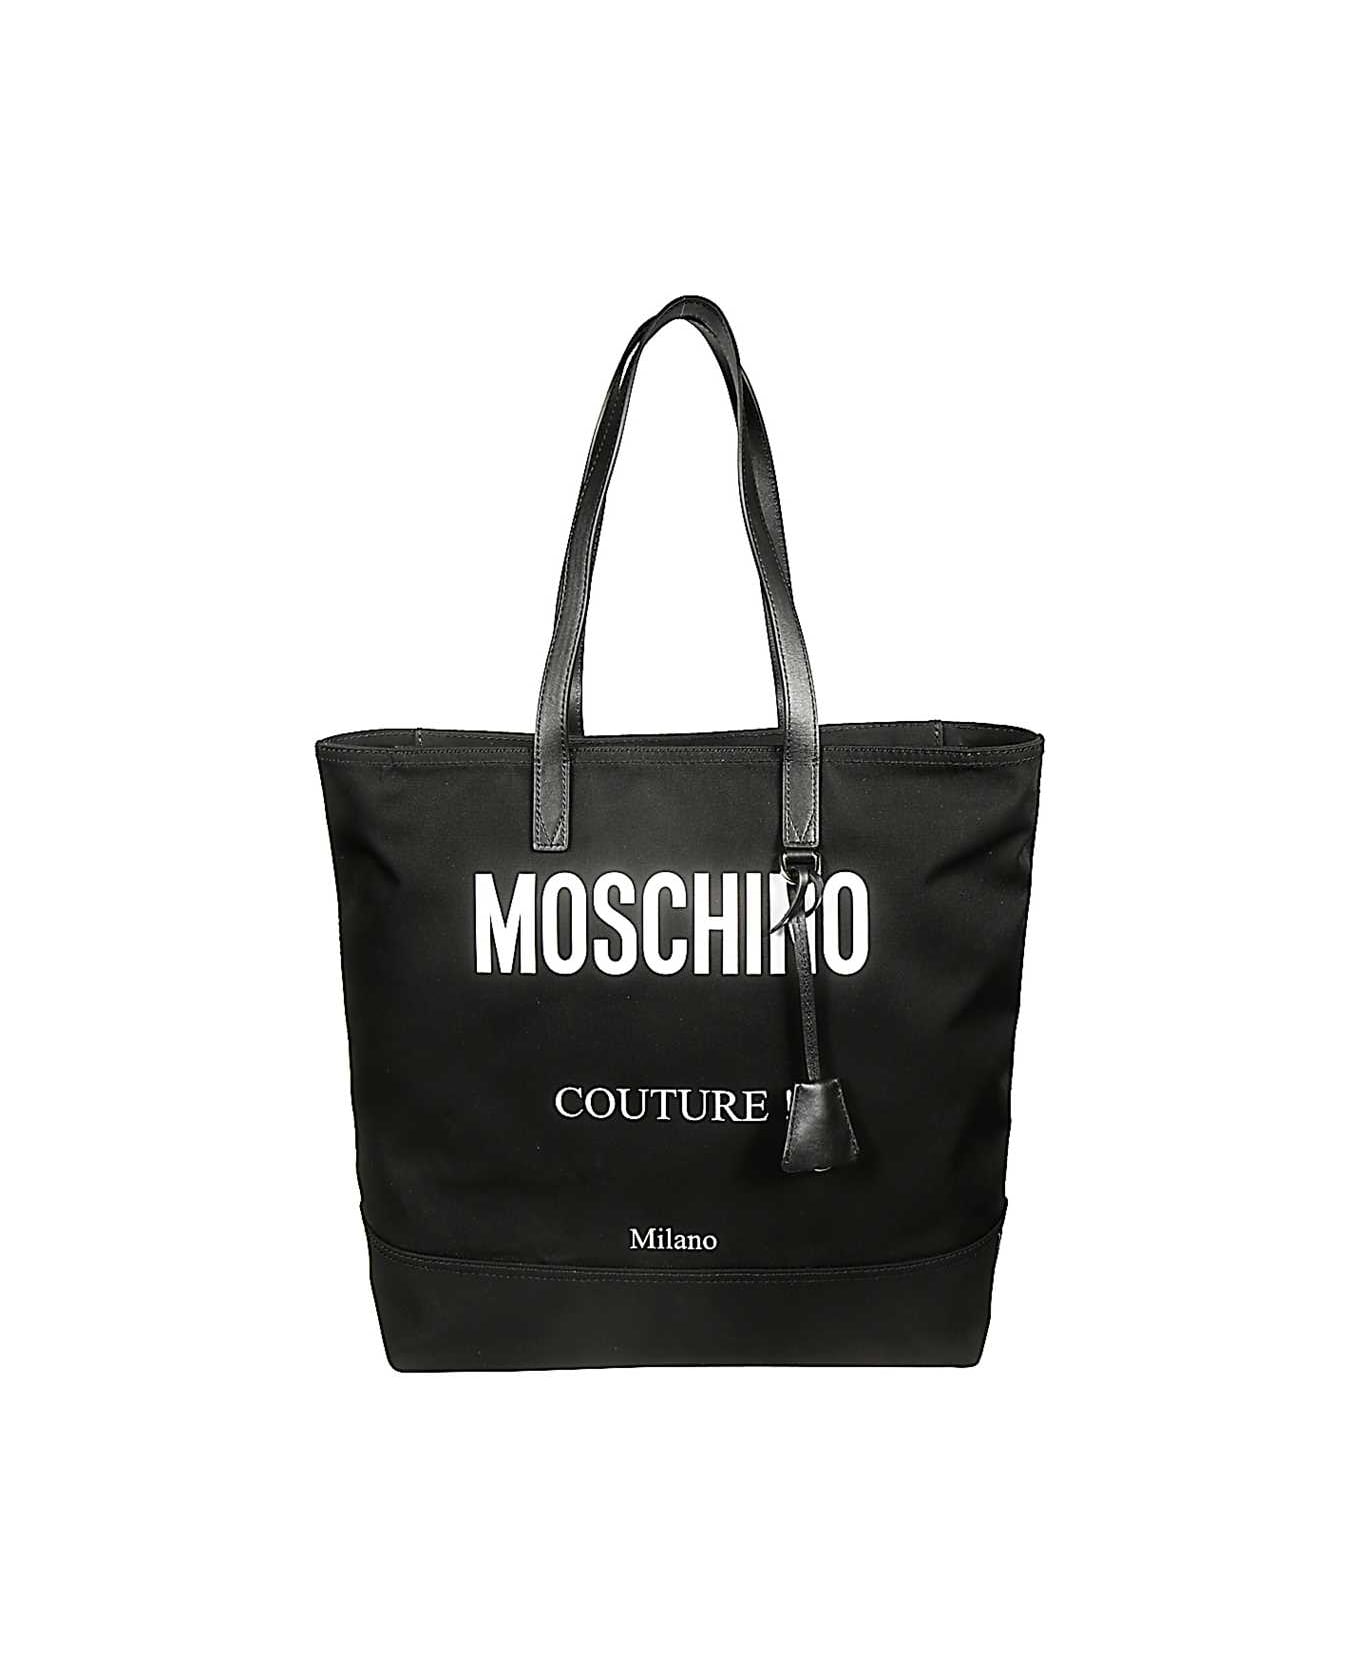 Moschino Tote Bag - black